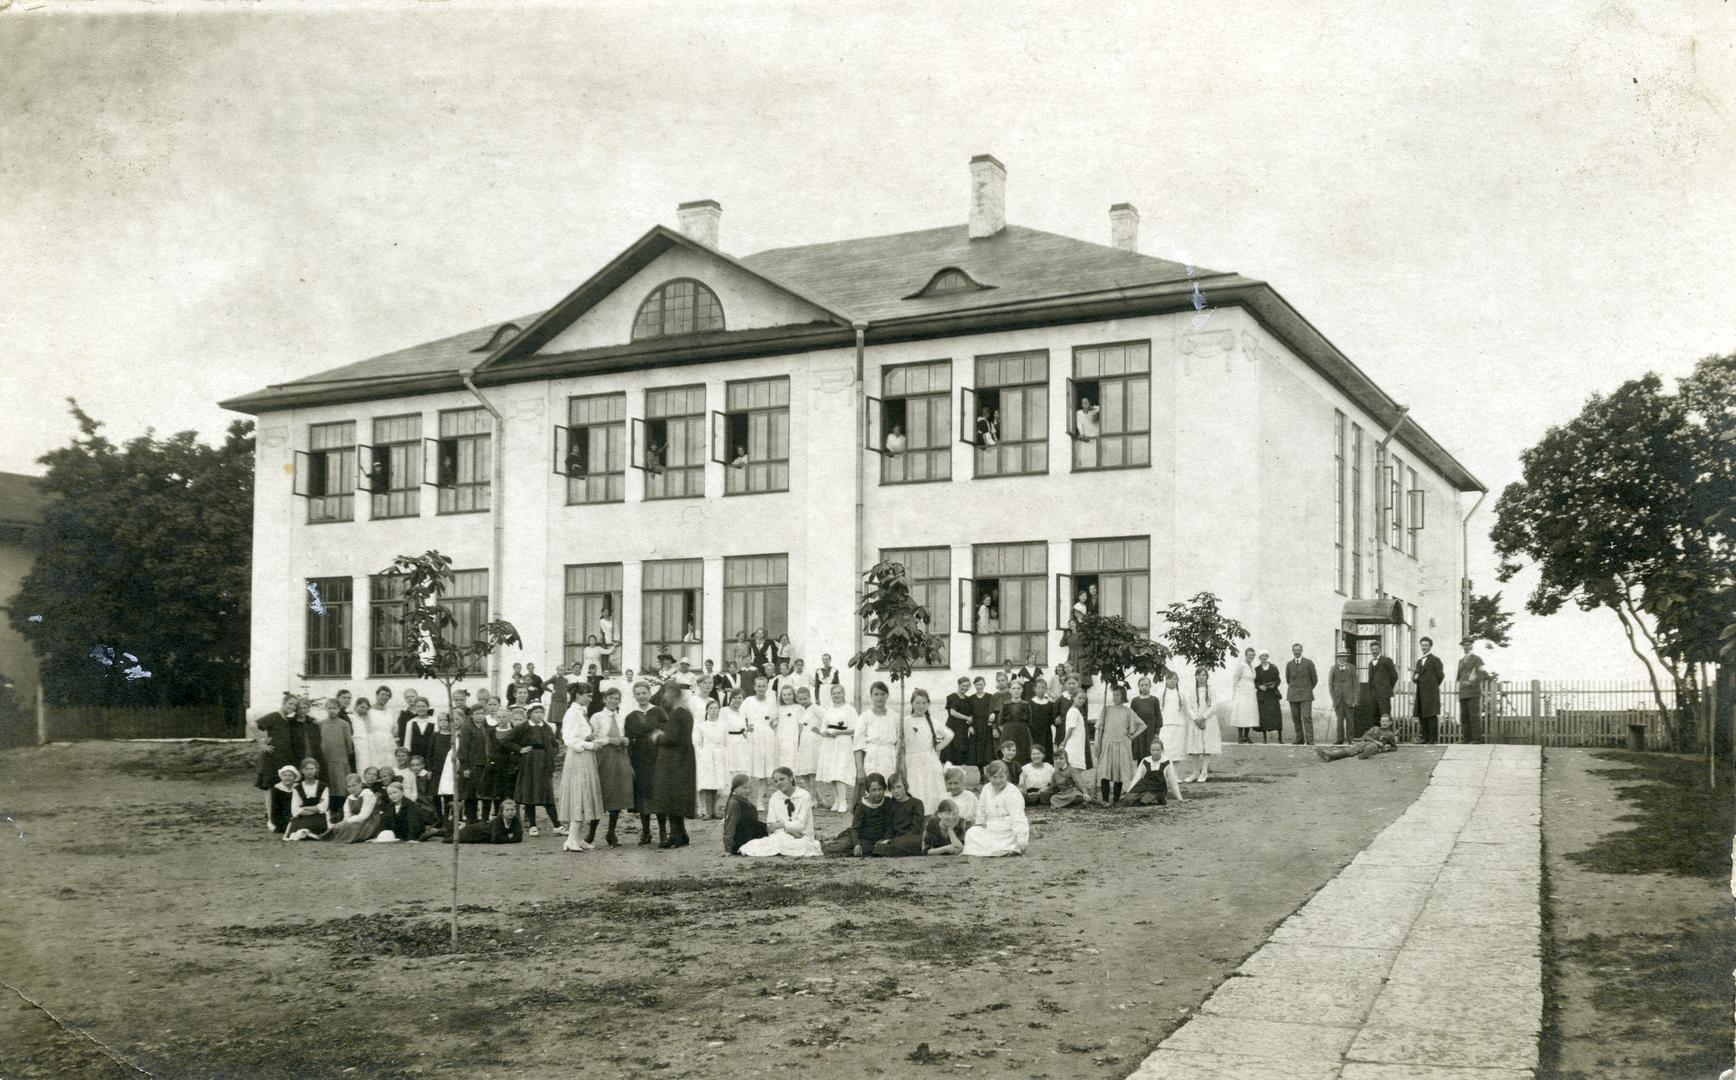 Tallinn City 5. Primary school family in front of school house on June 5, 1920